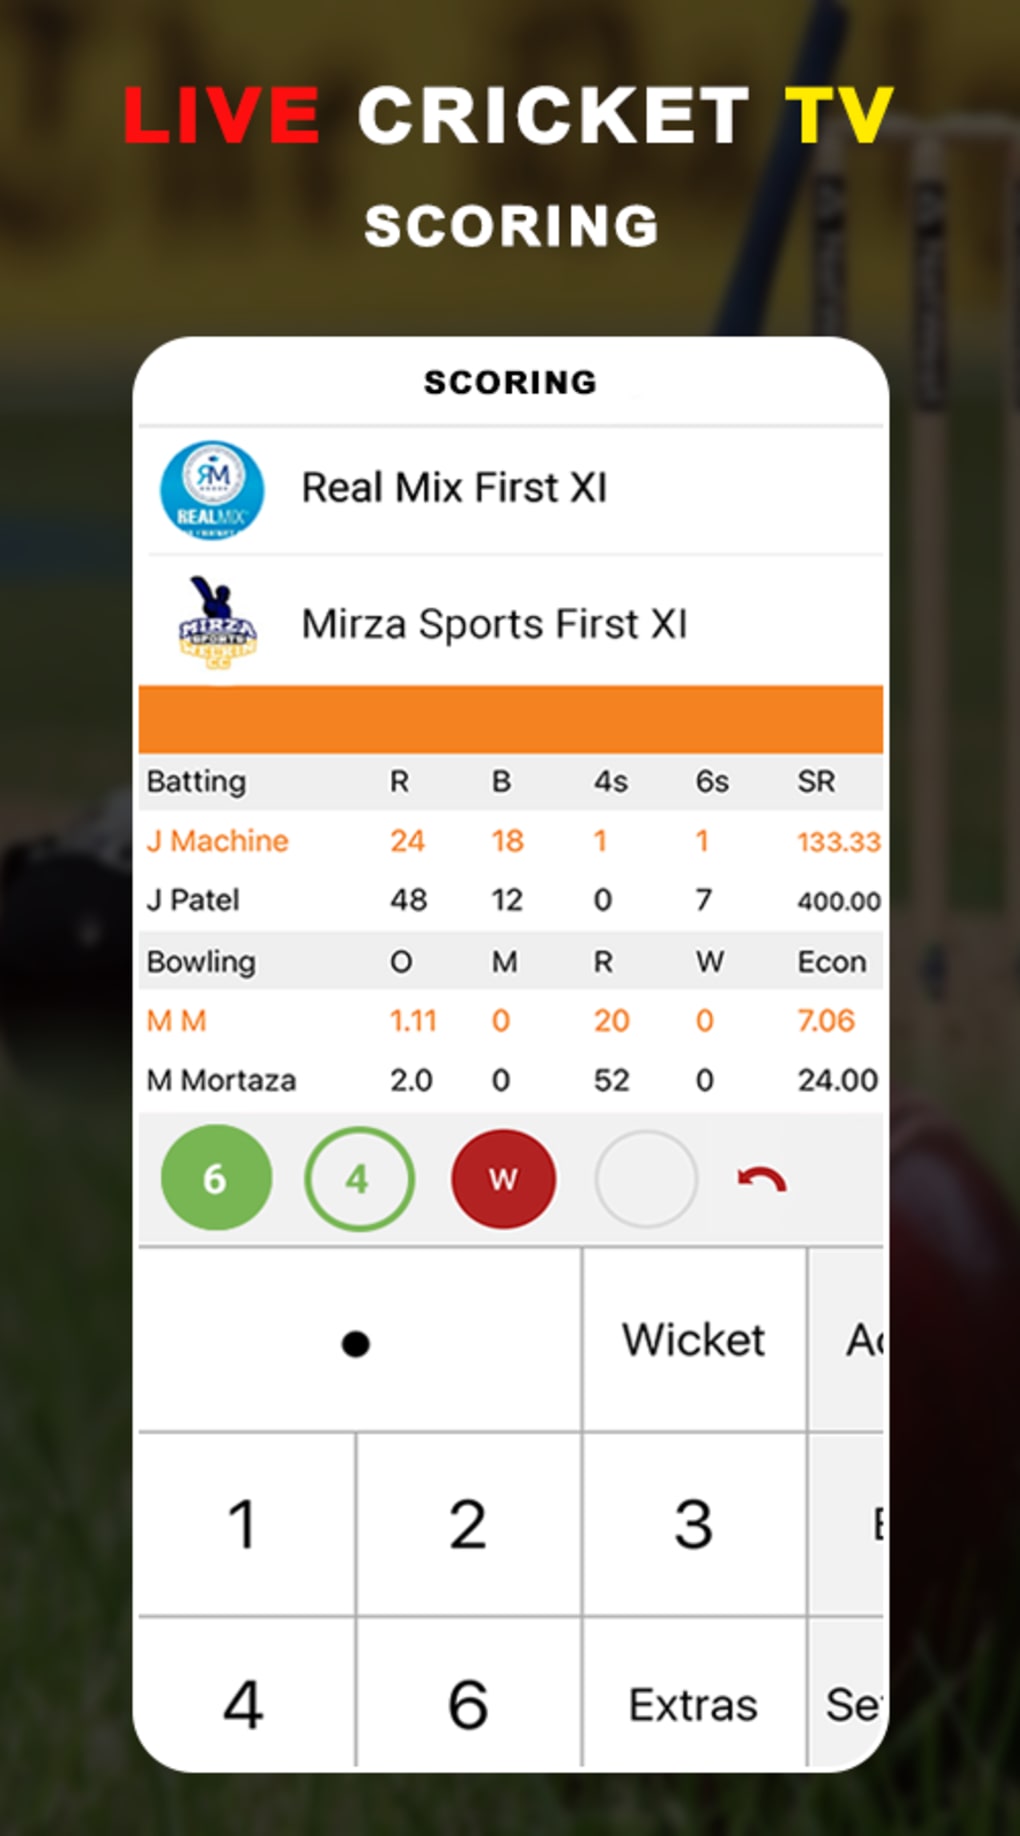 ipl live cricket streaming app